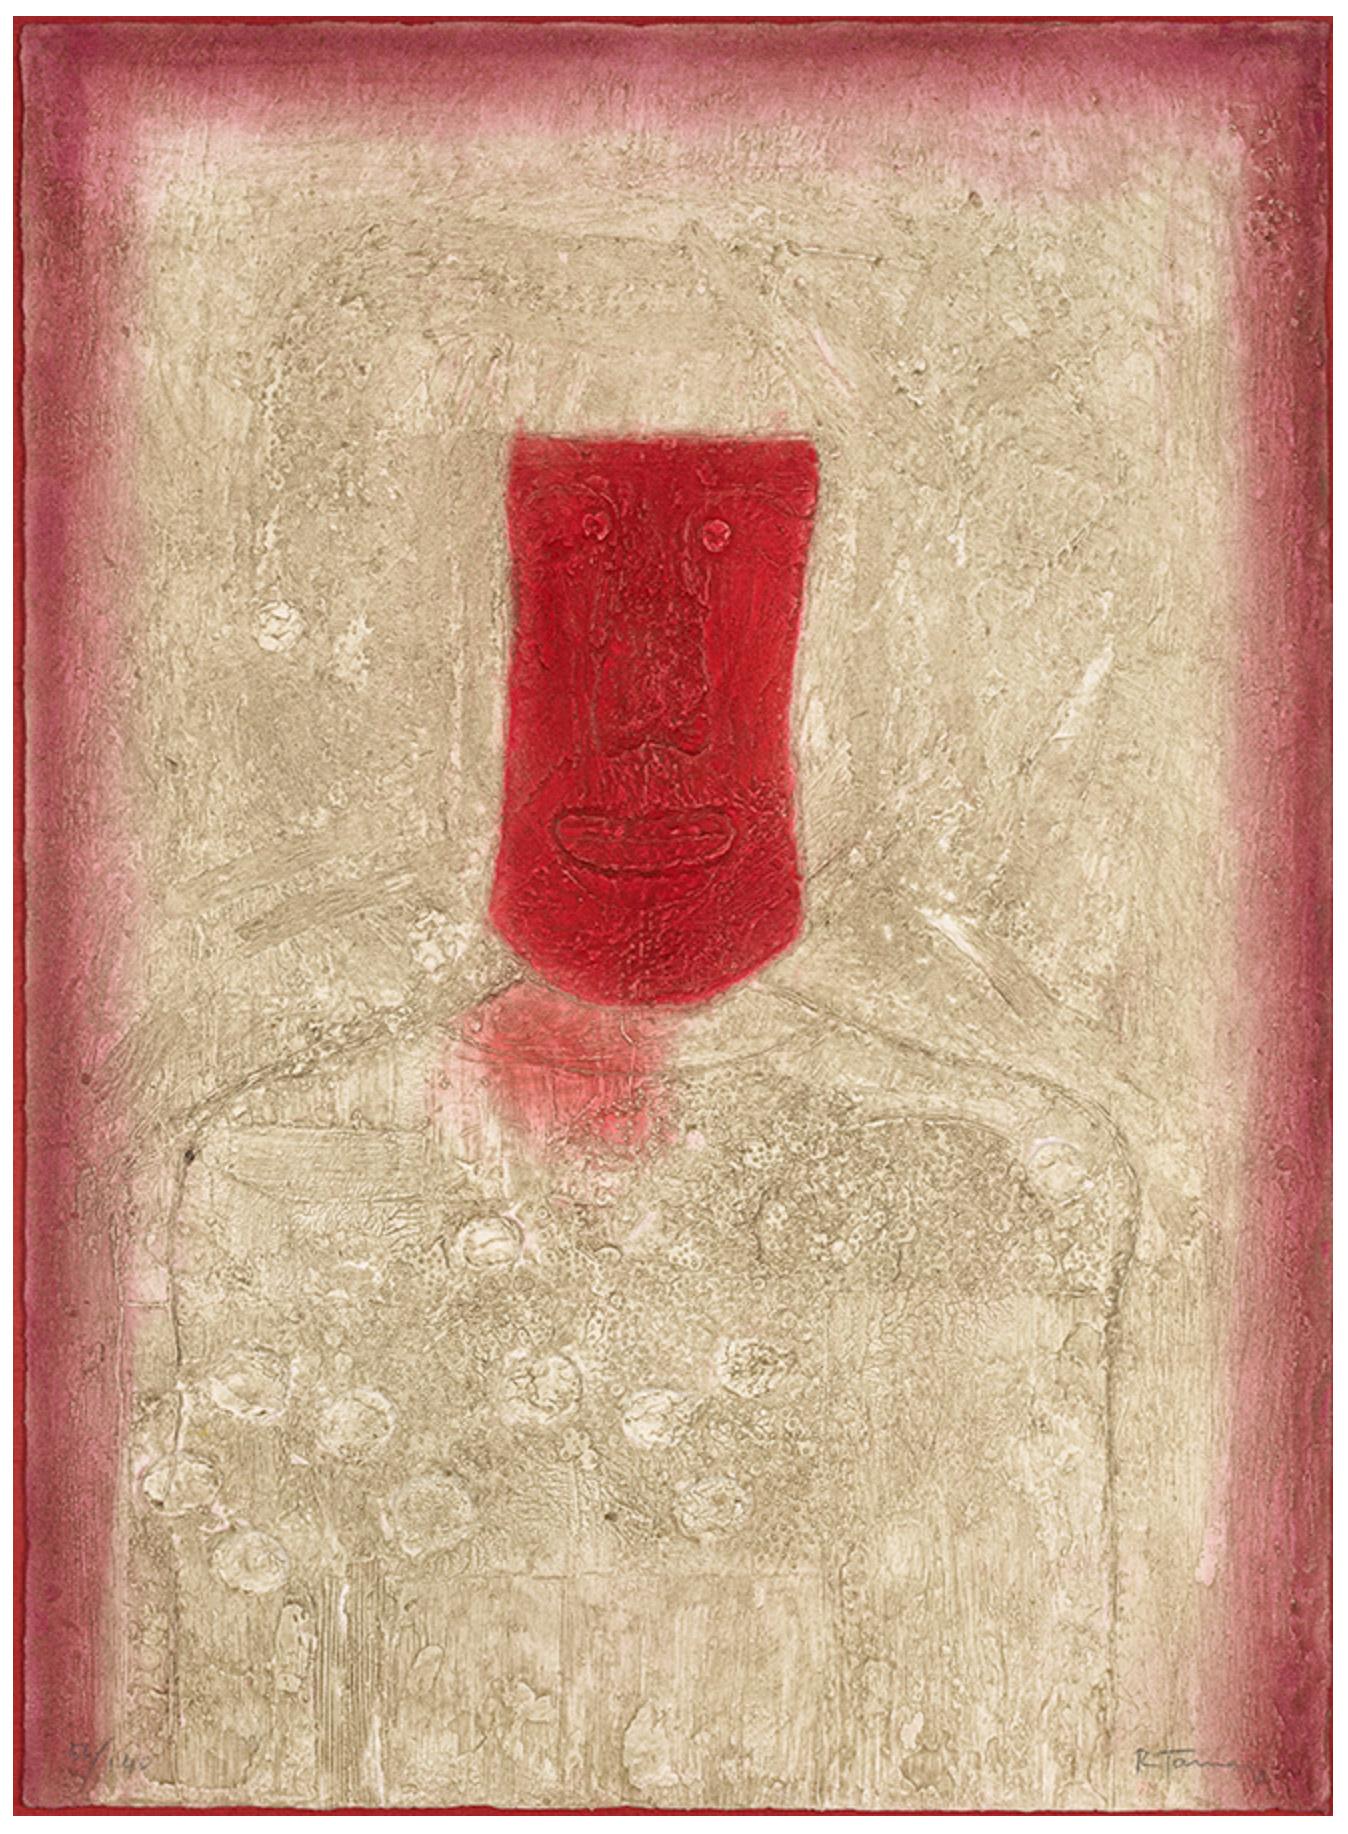 Máscara Roja (Red Mask) - Print by Rufino Tamayo